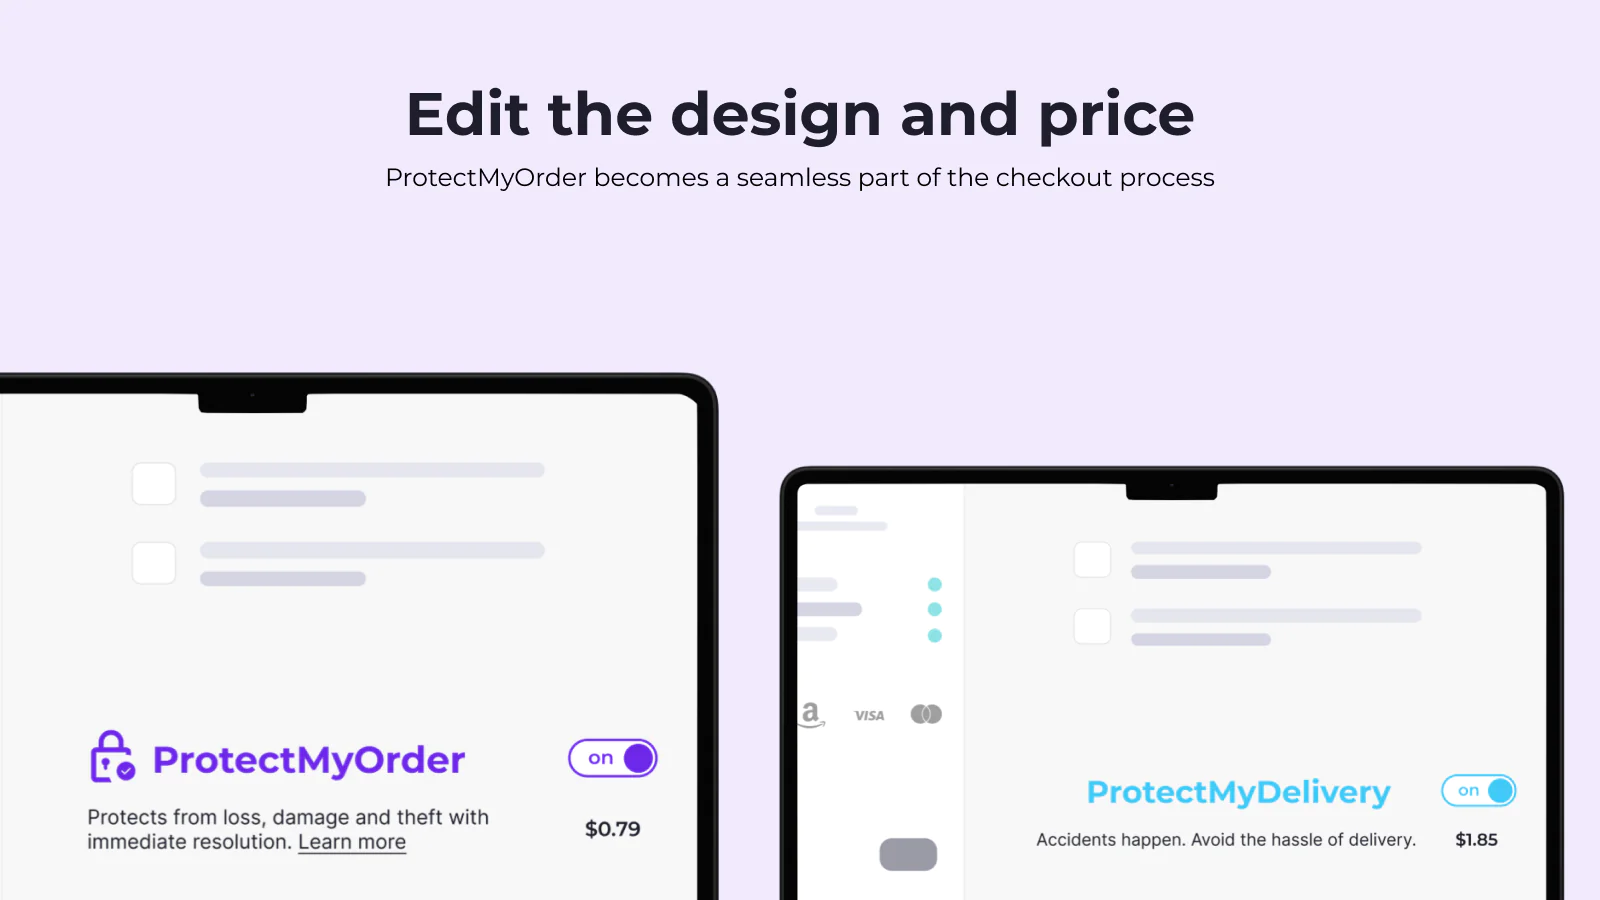 protectmyorder-edit-design-and-price